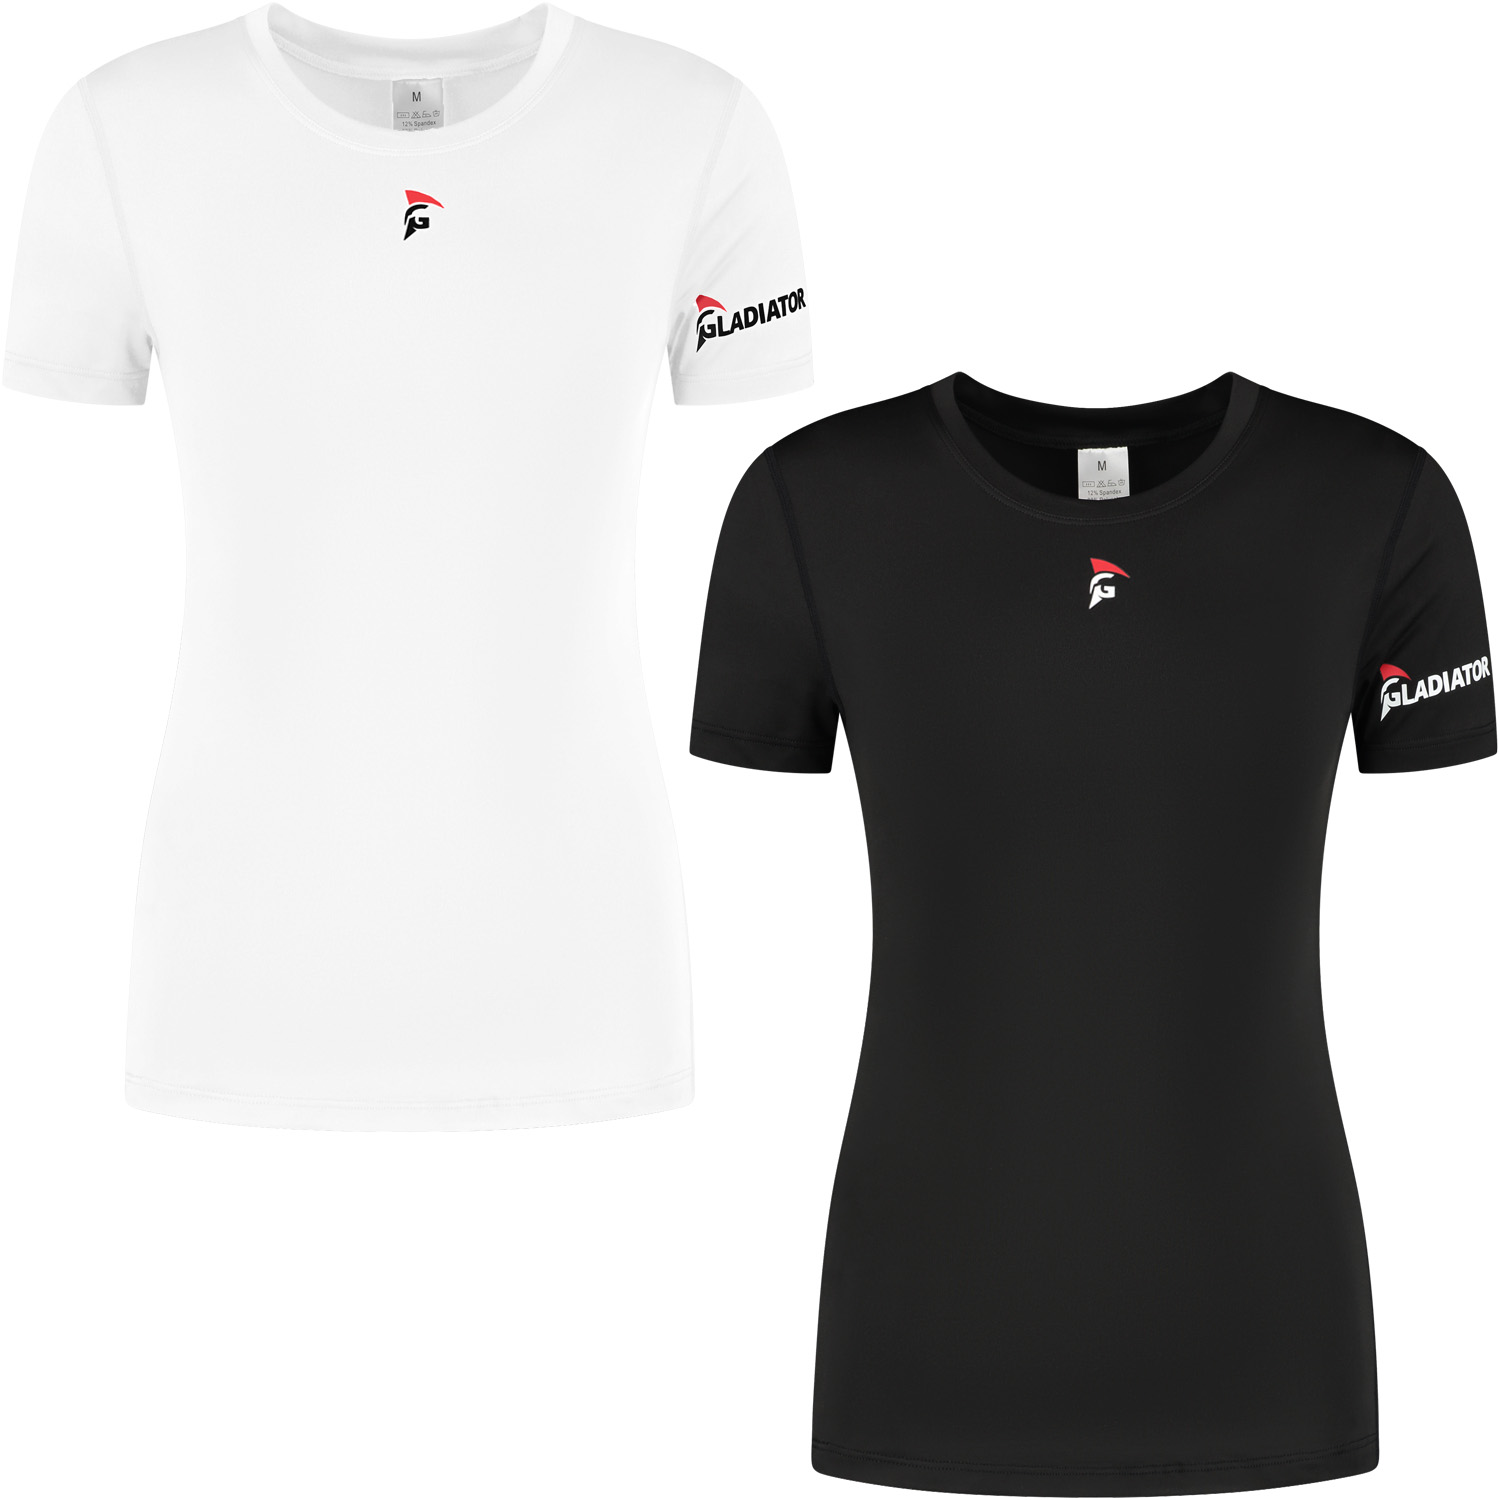 Gladiator Sports Compression Shirt - Women